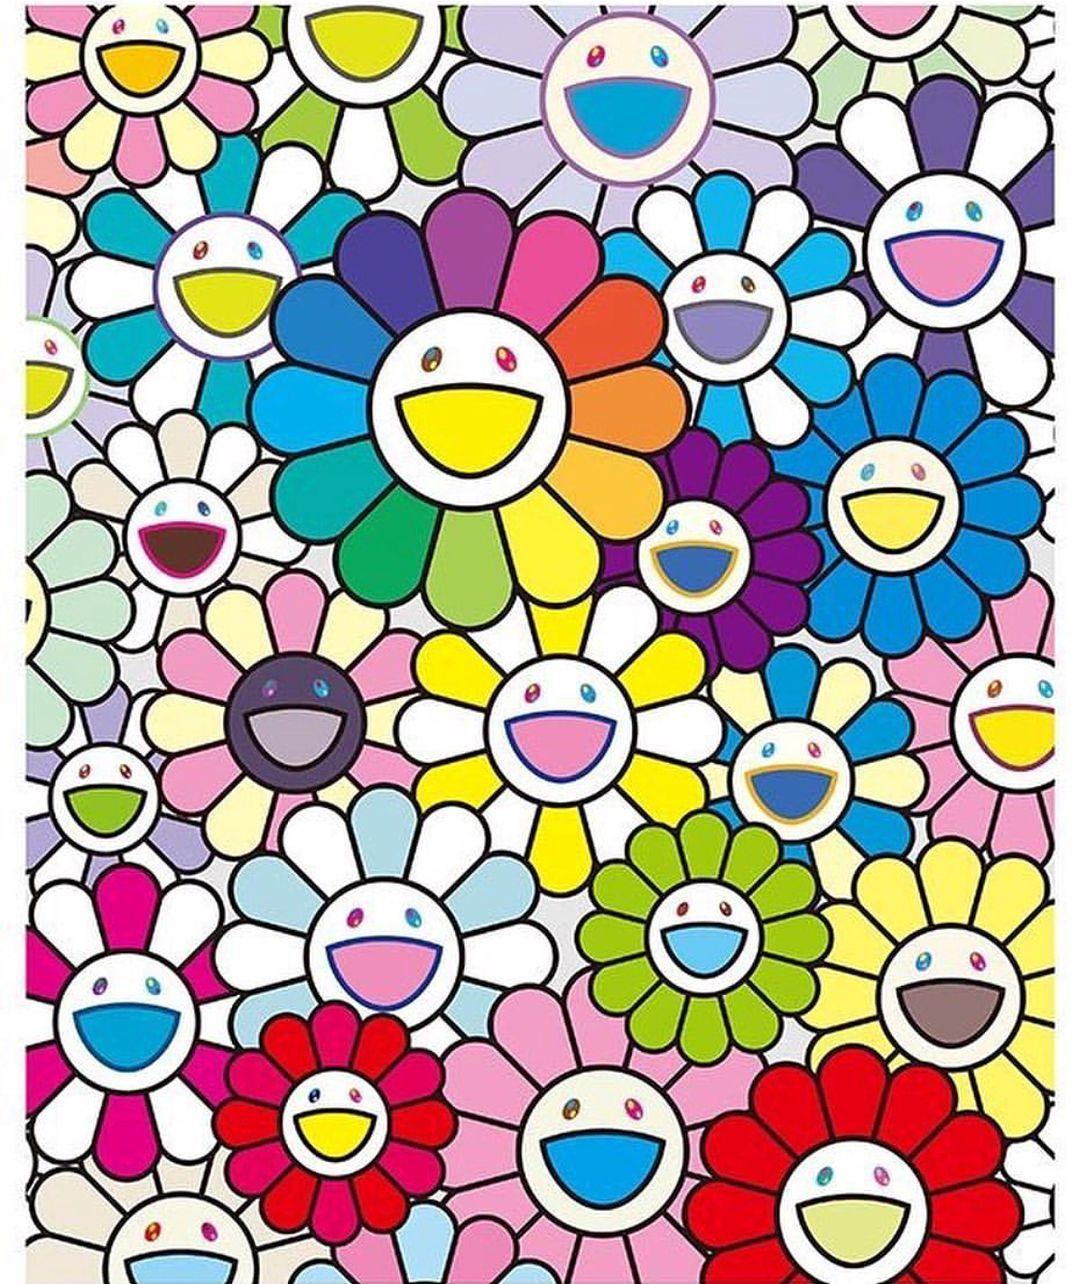 130 TAKASHI MURAKAMI Cosmos wallpaper  Art  Design 23 September 2014   Auctions  Wright Auctions of Art and Design